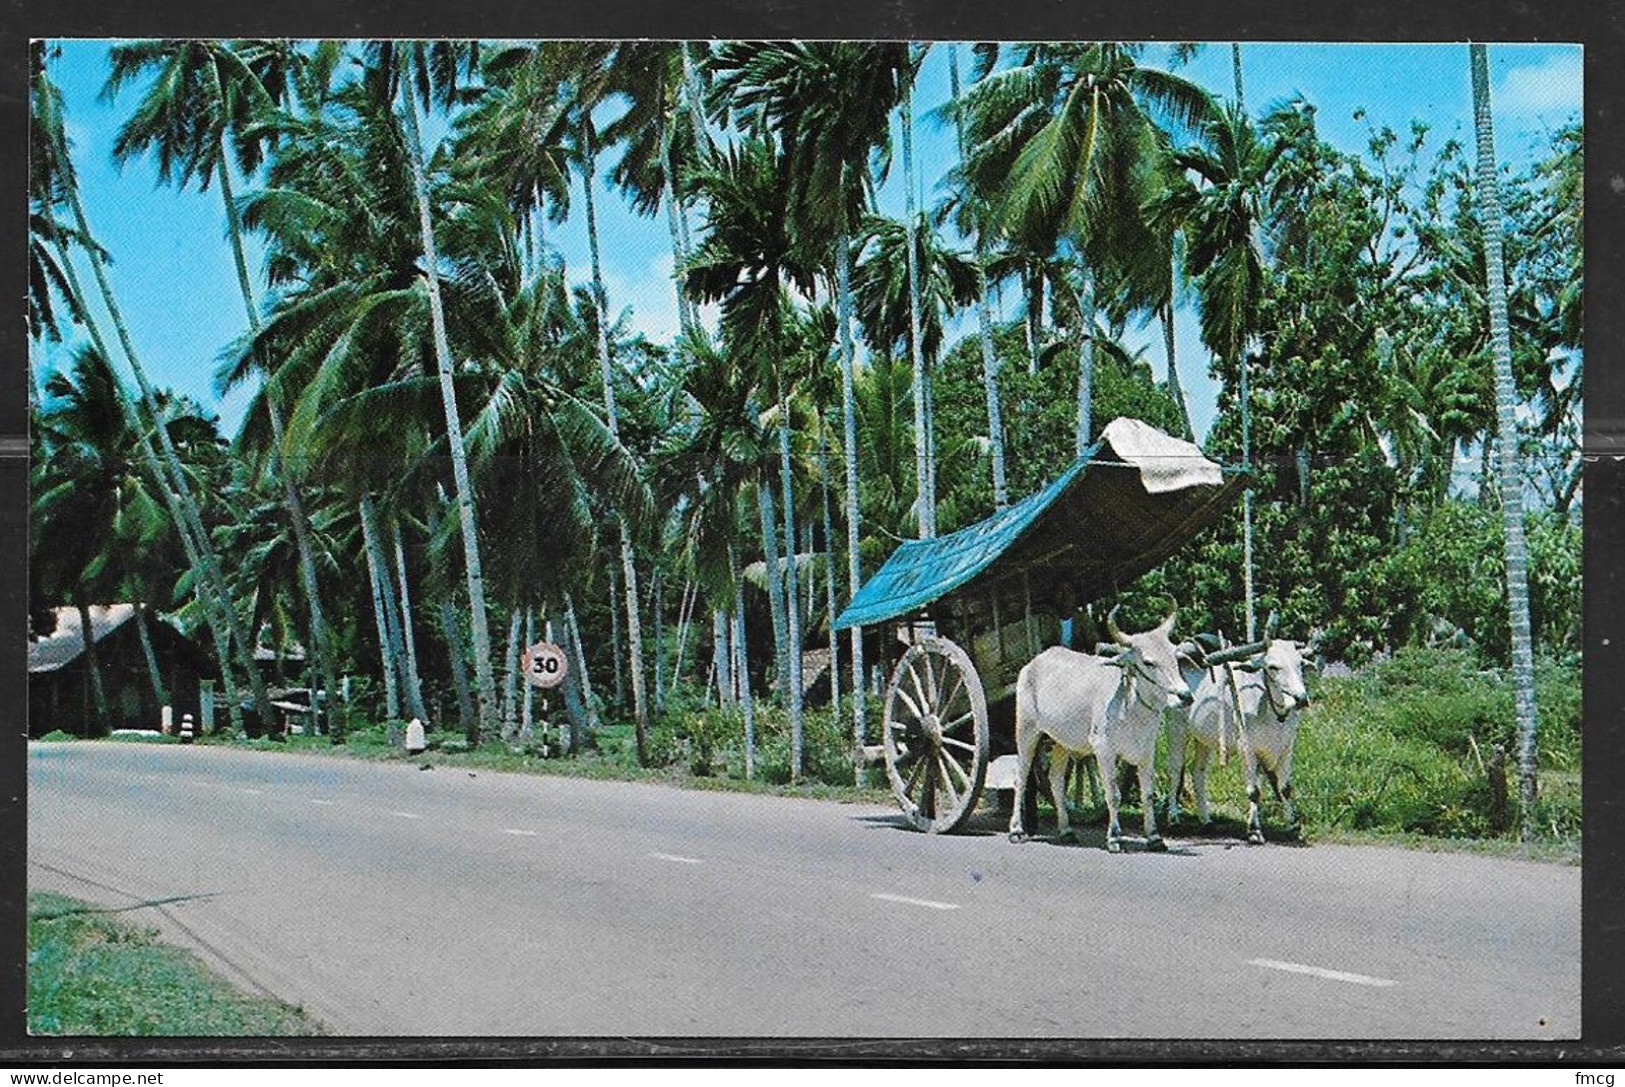 Malacca, Bullock Cart, Unused. - Malasia